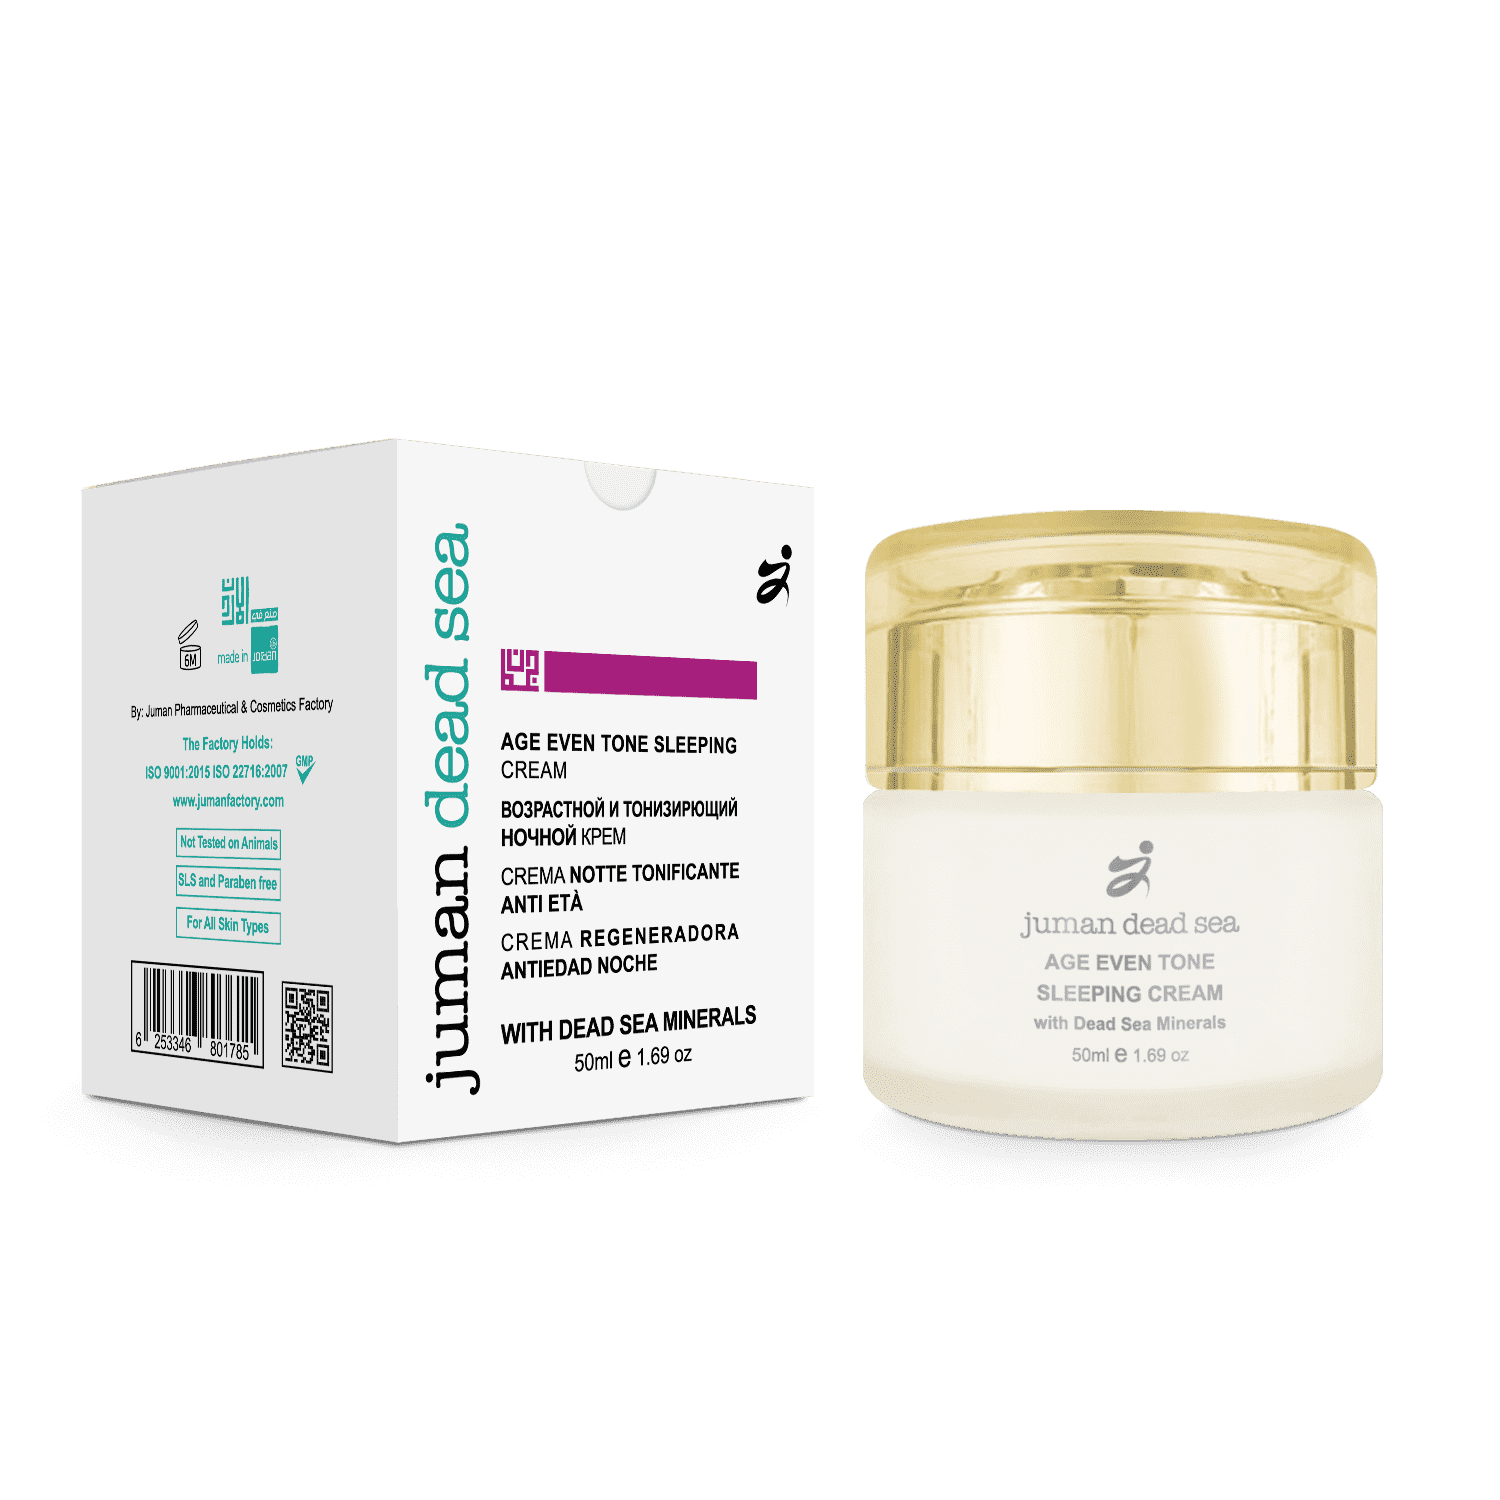 Juman Moisturizer Skin Intensive Night Cream With Dead Sea Minerals 50 ml - Mrayti Store